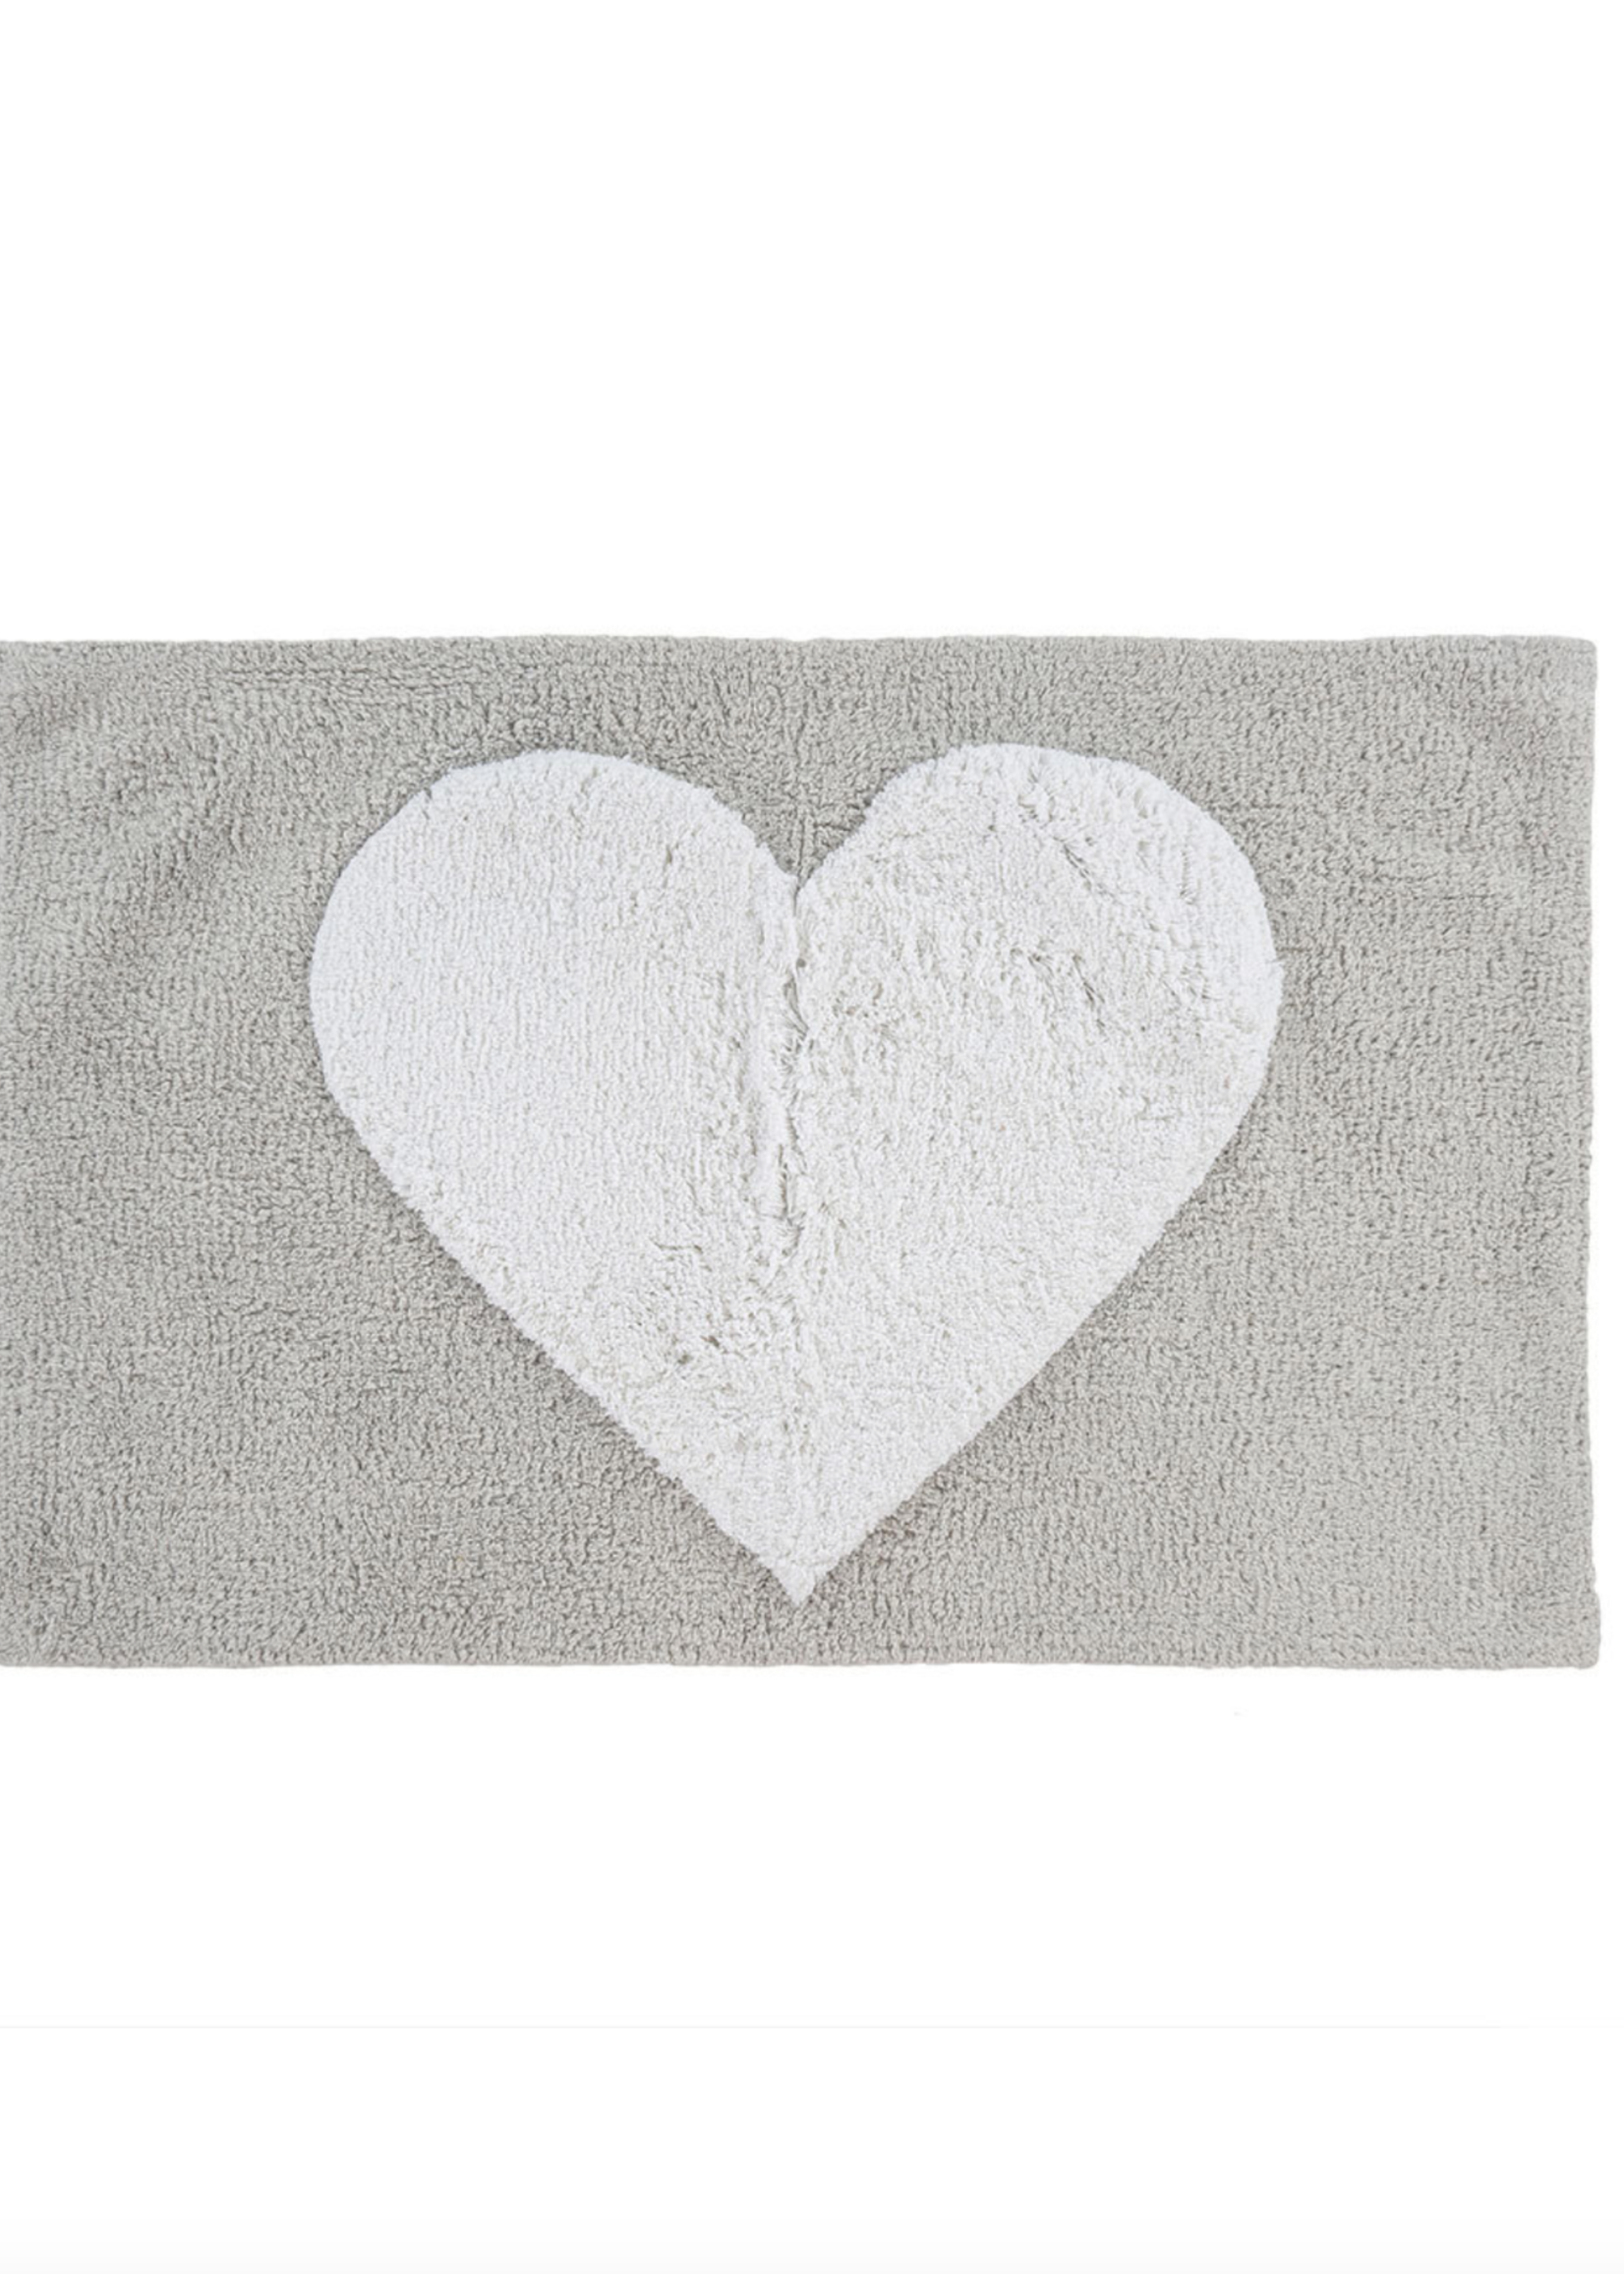 Indaba Trading Co Heart Bath Mat | Grey/White